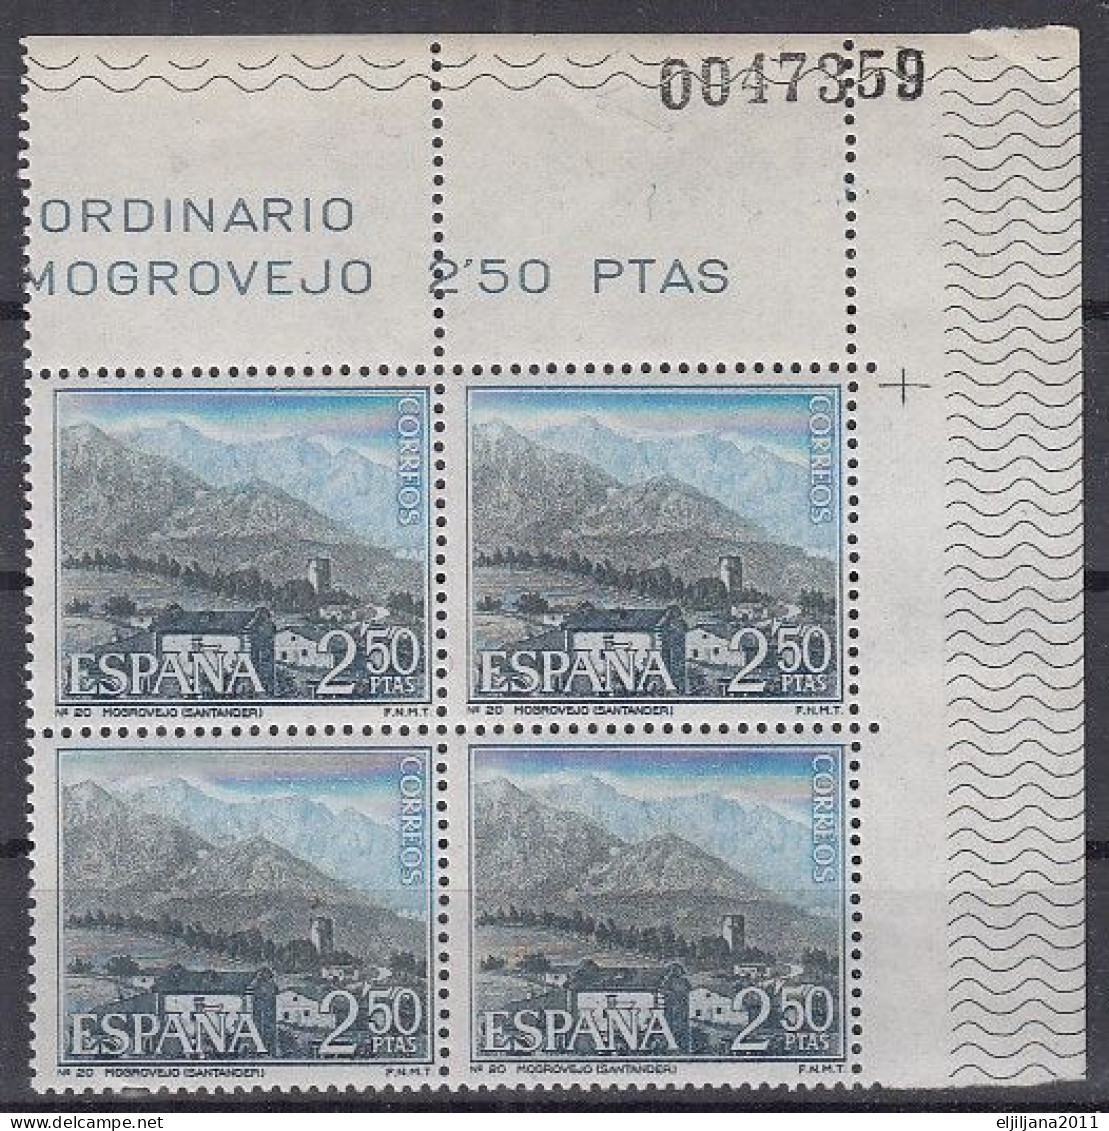 ⁕ SPAIN / ESPANA 1965 ⁕ Mogrovejo - Santander Mi.1589 ⁕ MNH Block Of 4 - Nuovi